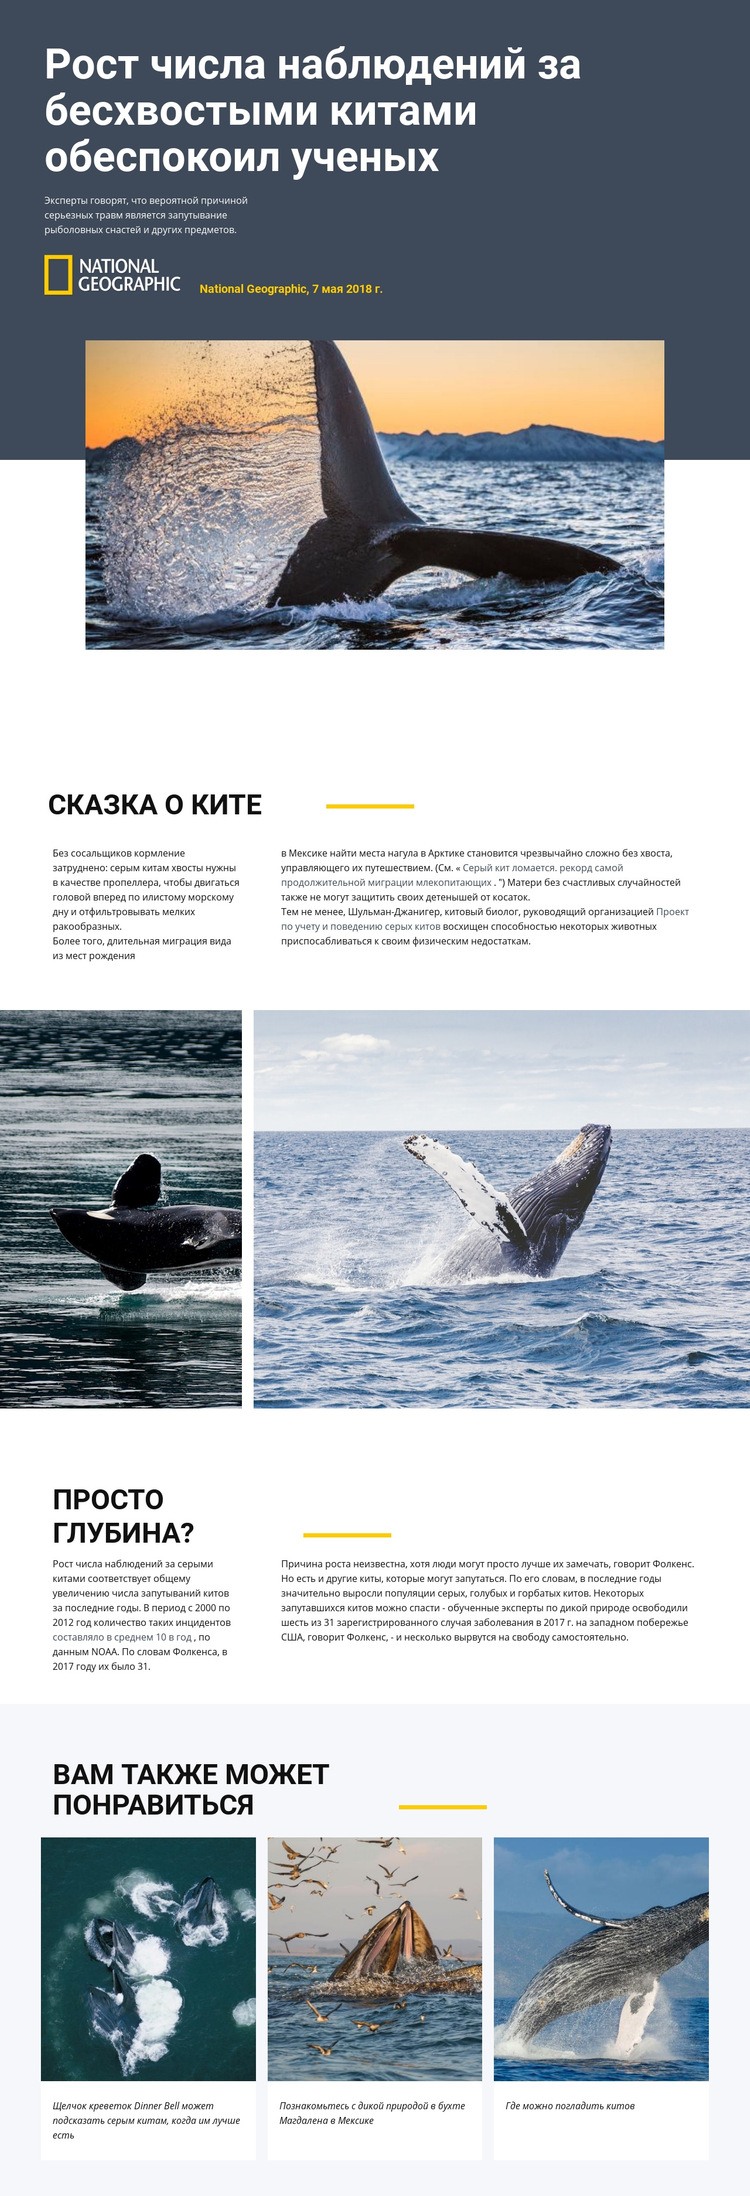 Центр наблюдения за китами Шаблоны конструктора веб-сайтов